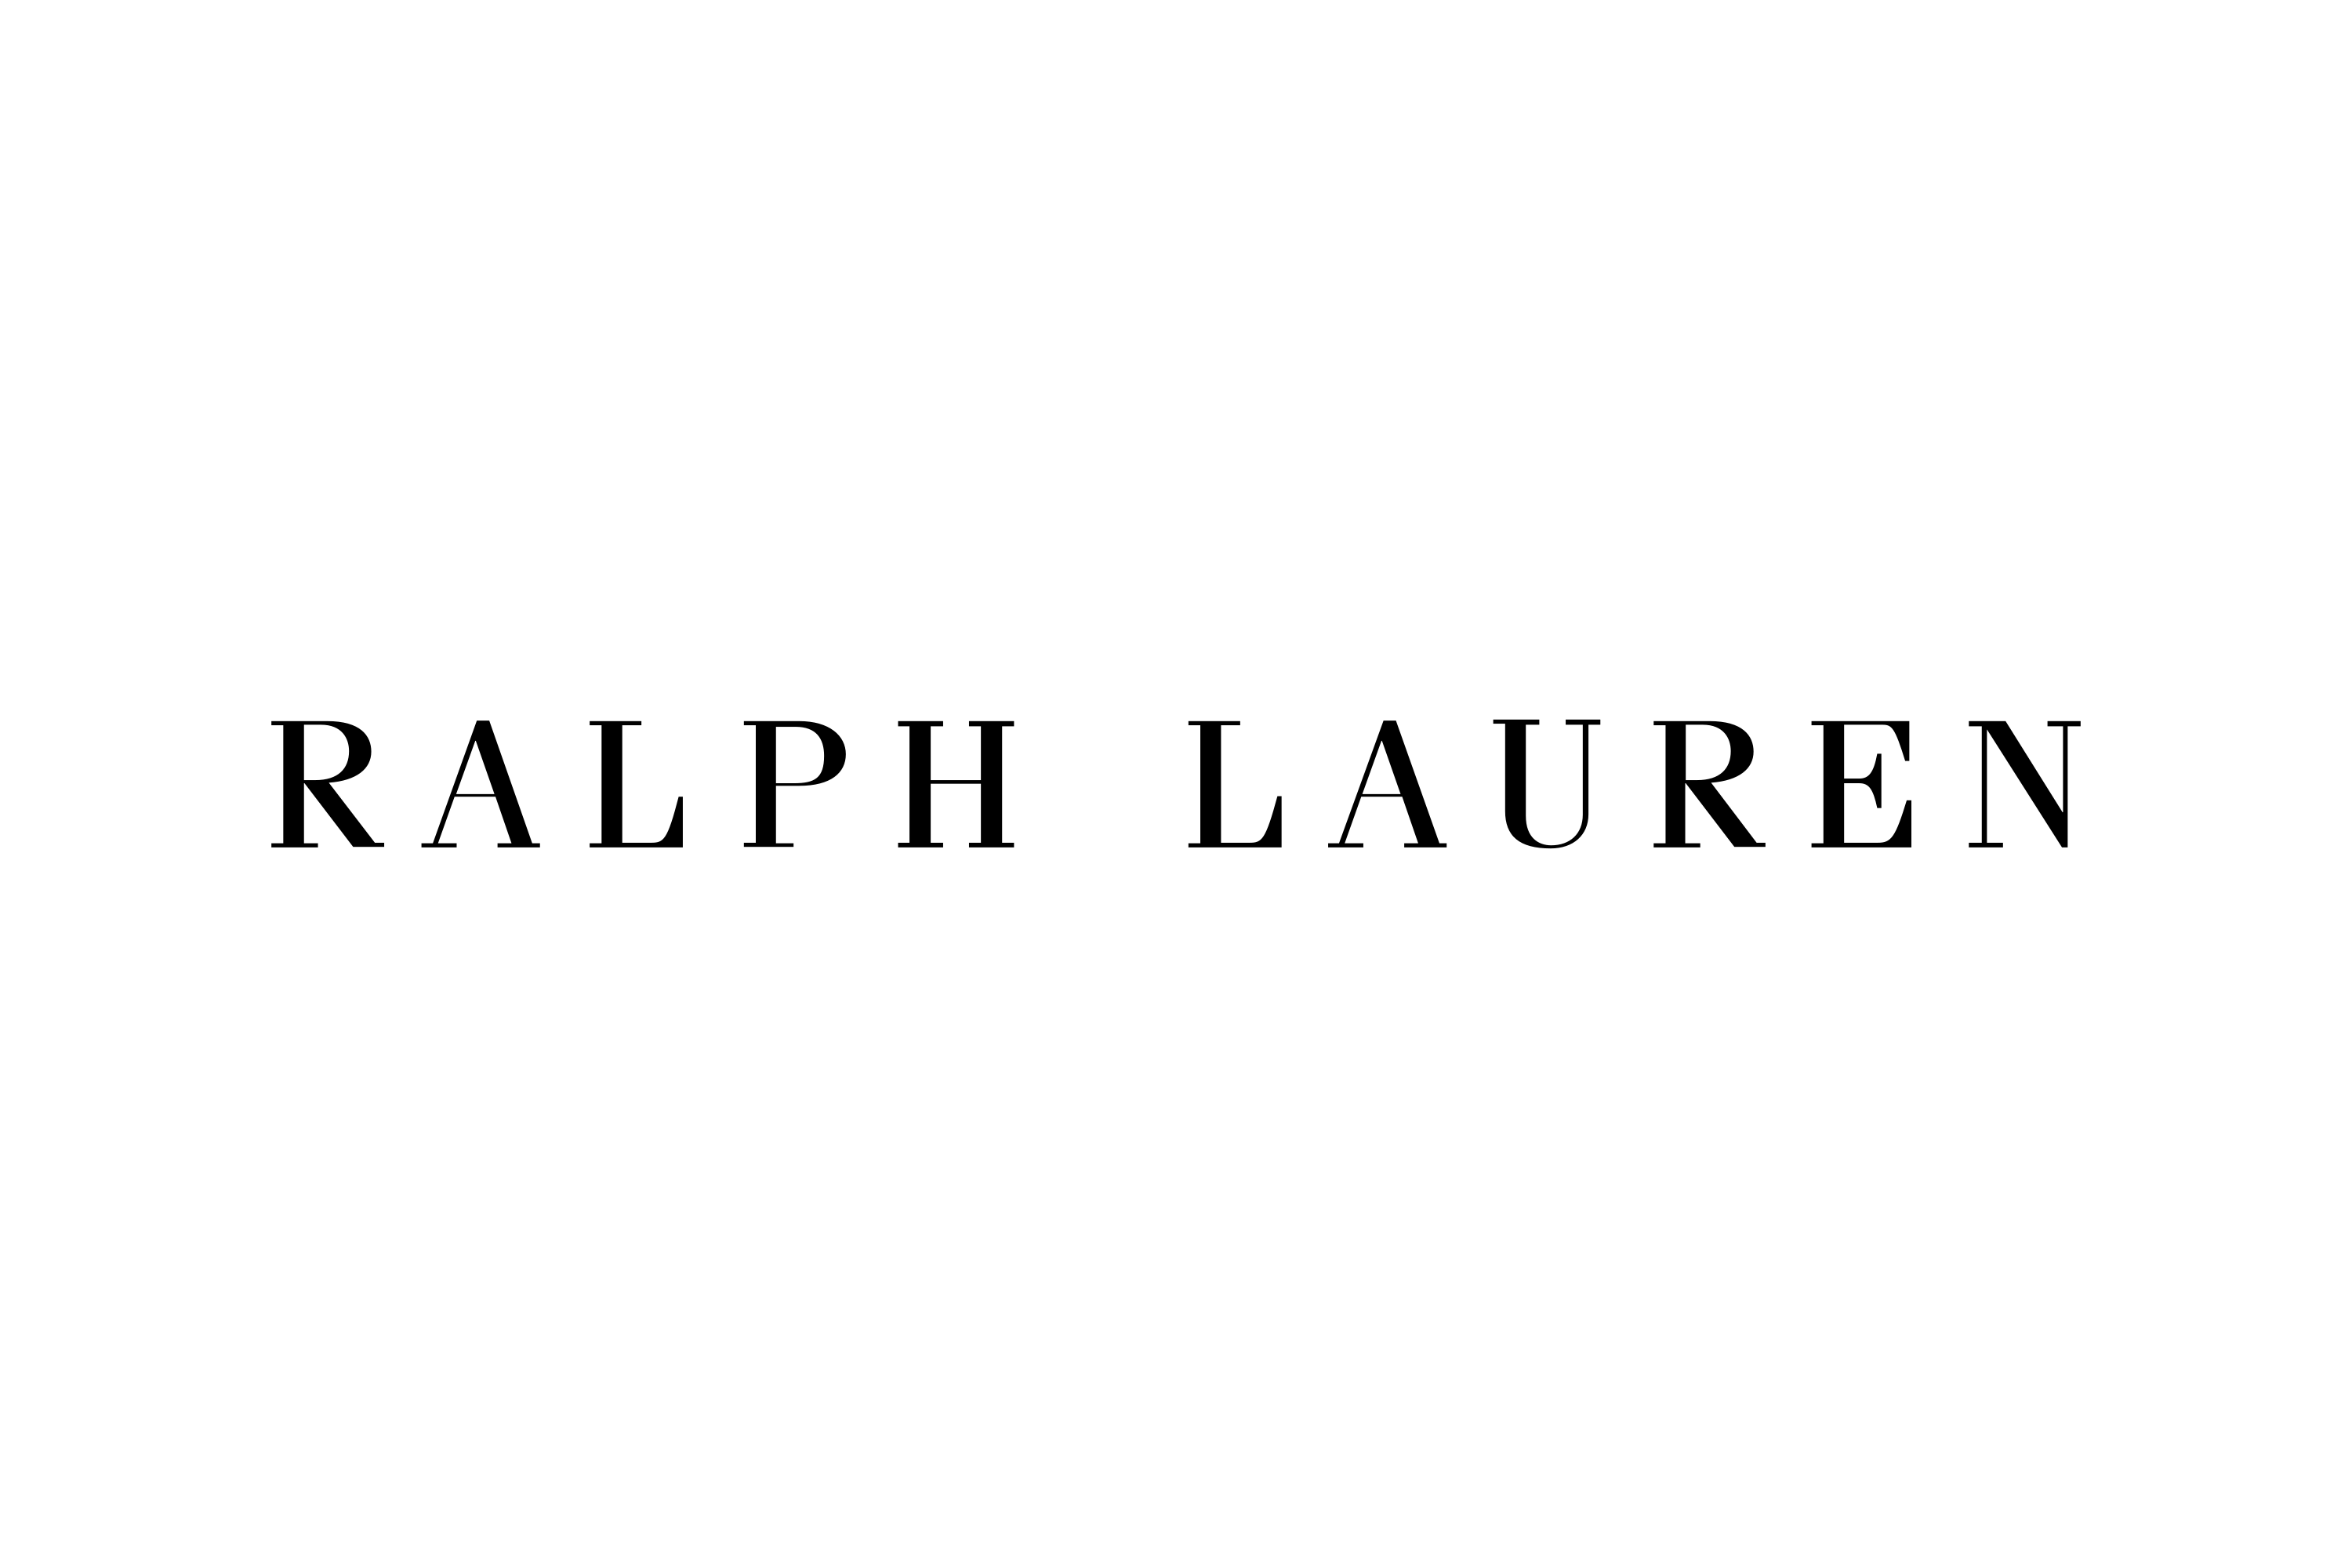 Download Ralph Lauren Corporation Logo in SVG Vector or PNG File Format ...